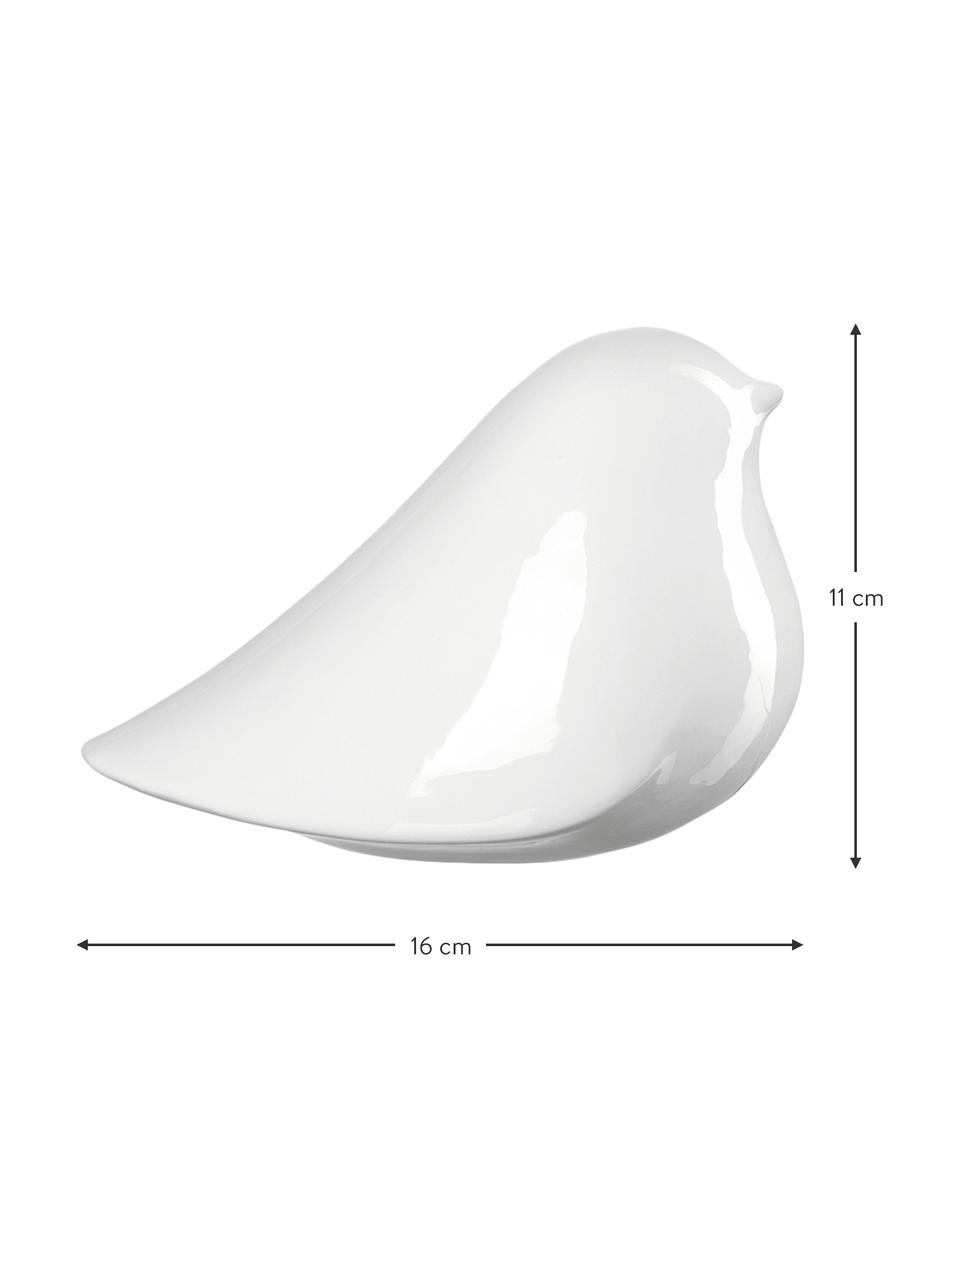 Deko-Vögel Alassio aus Porzellan in Weiß, 2 Stück, Porzellan, Weiß, B 16 x H 11 cm